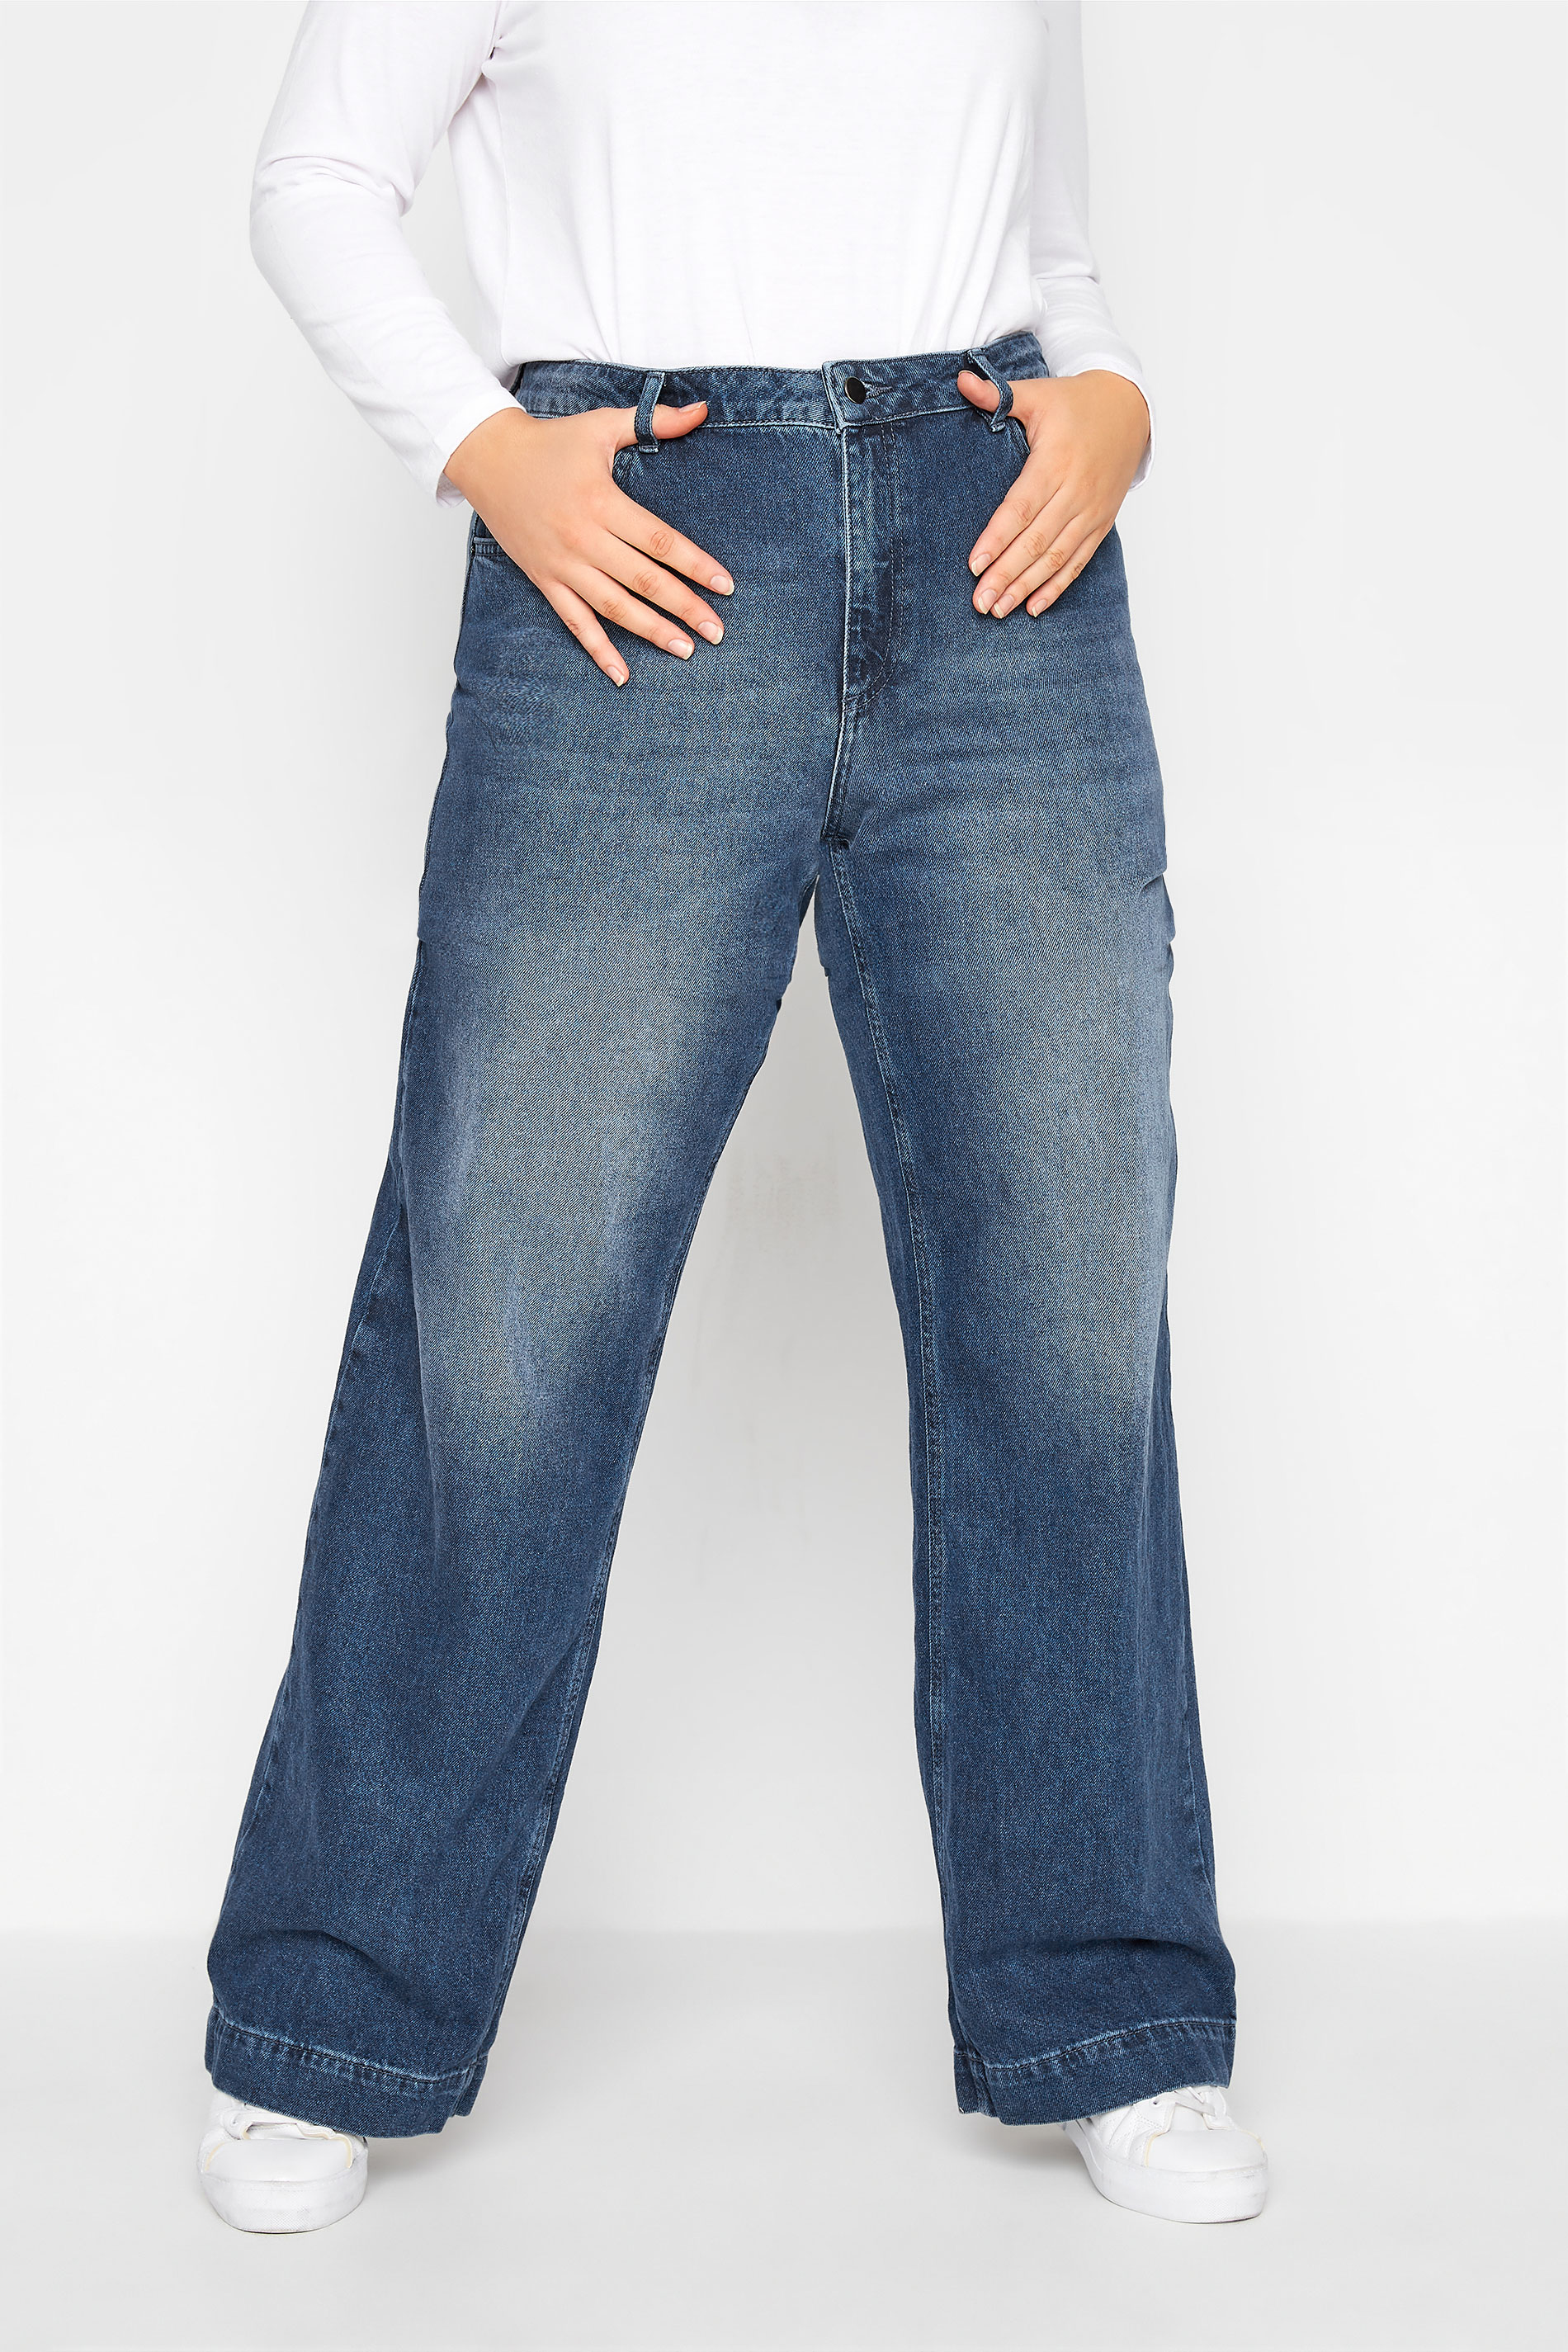 Grande taille  Jeans Grande taille  Jeans Bootcut | Jean Bleu Design Ample - PR41823